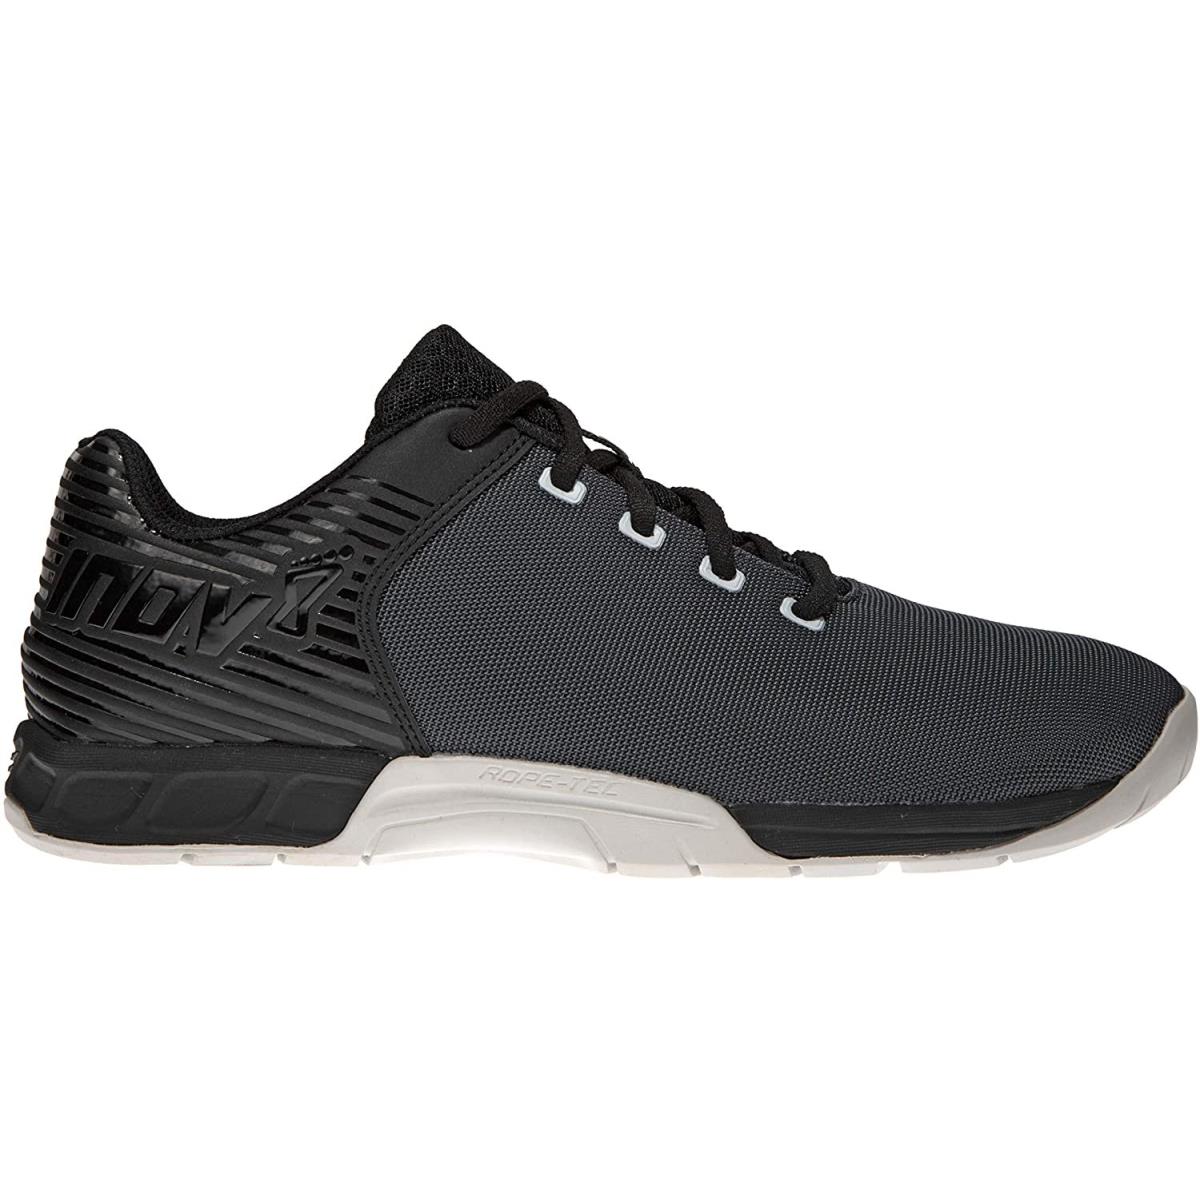 Inov-8 Womens F-lite 270 - Cross Trainer Shoes - Comfortable and Versatile Grey/Black